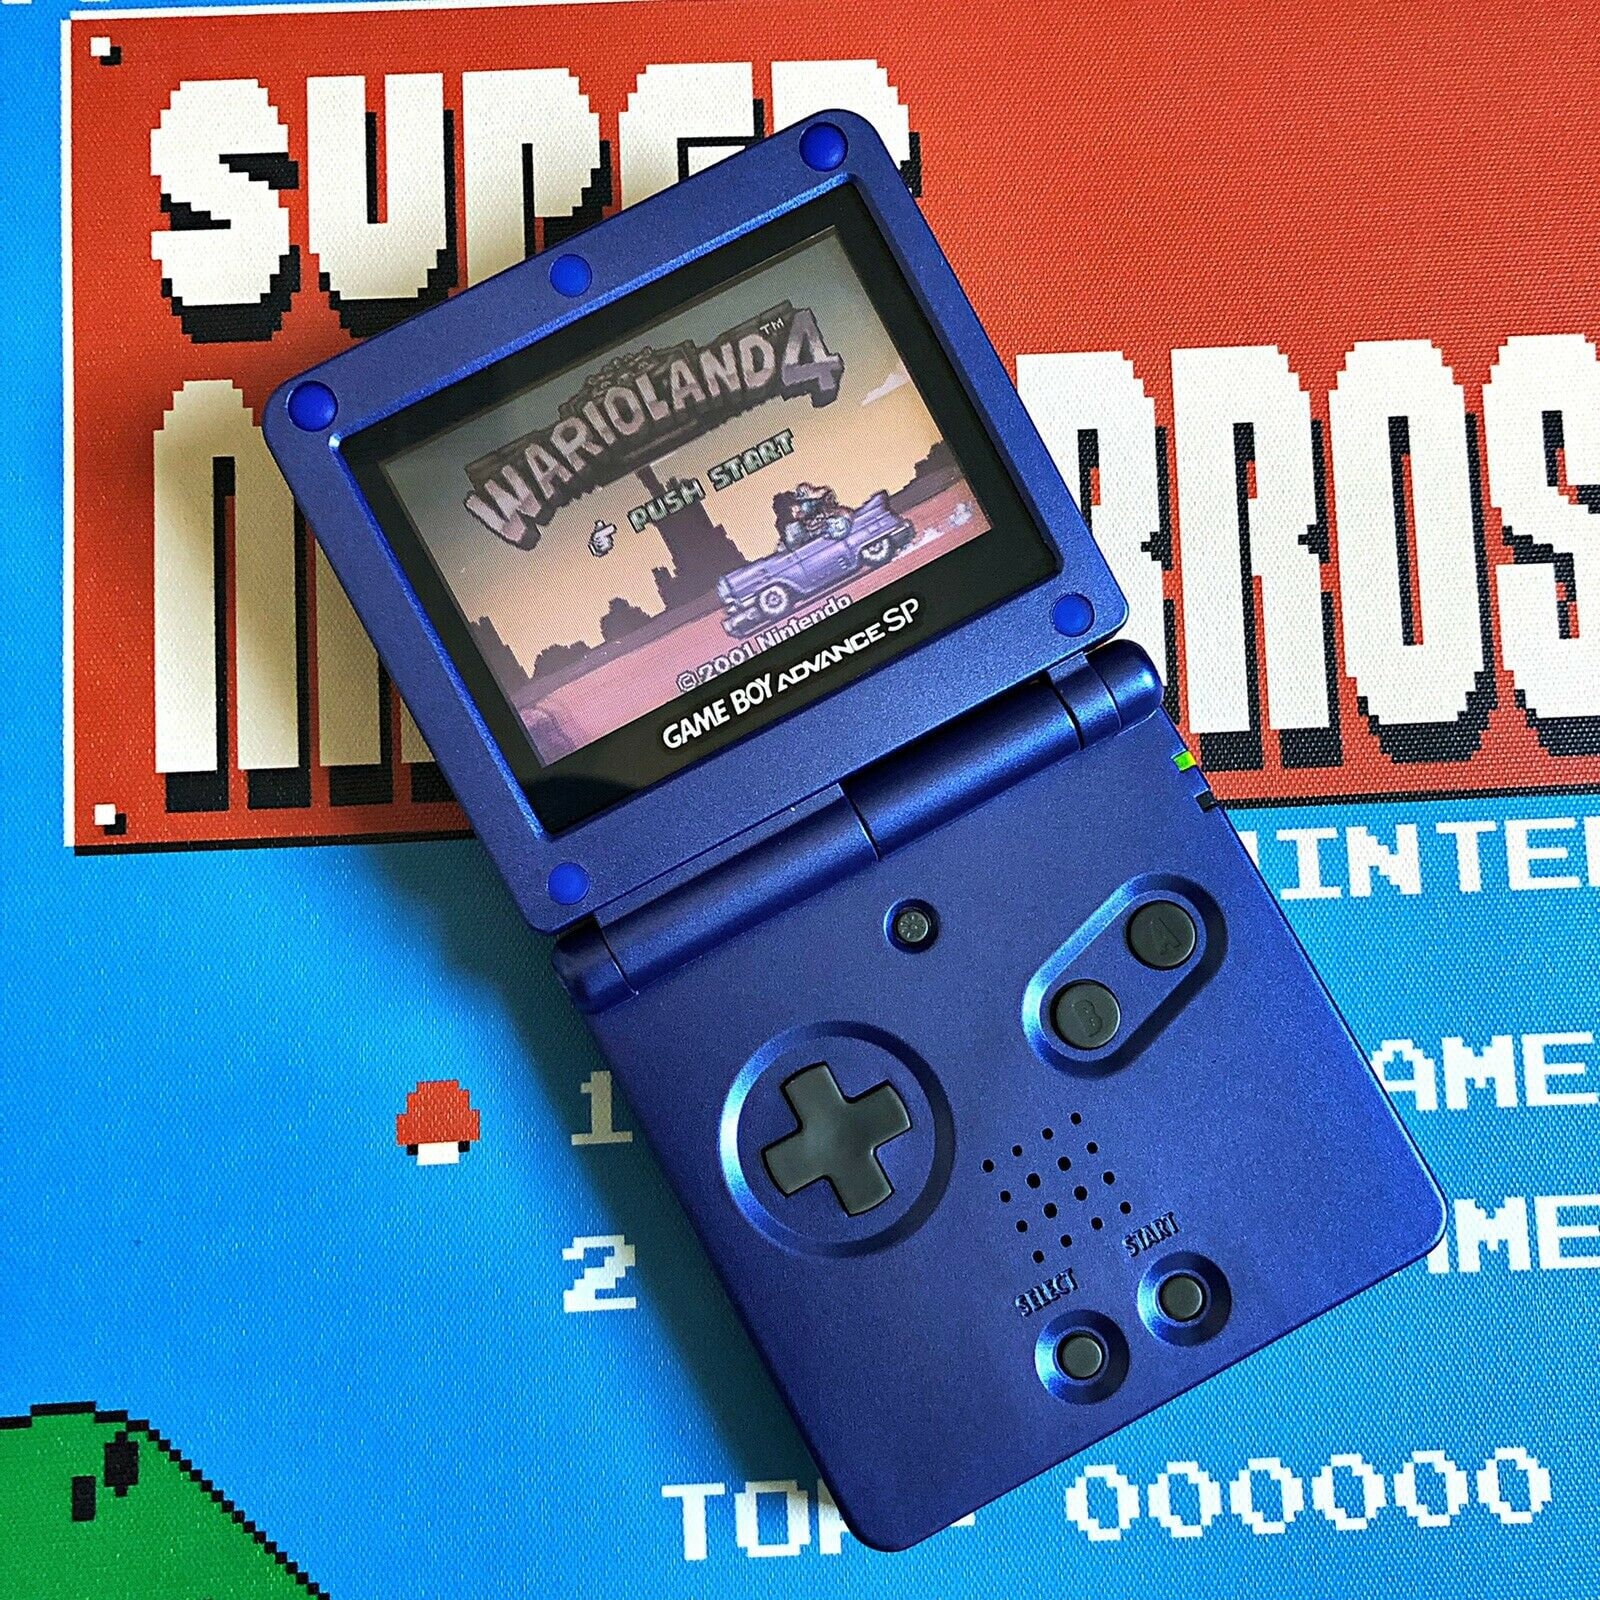 Nintendo Game Boy Advance SP Cobalt Blue 